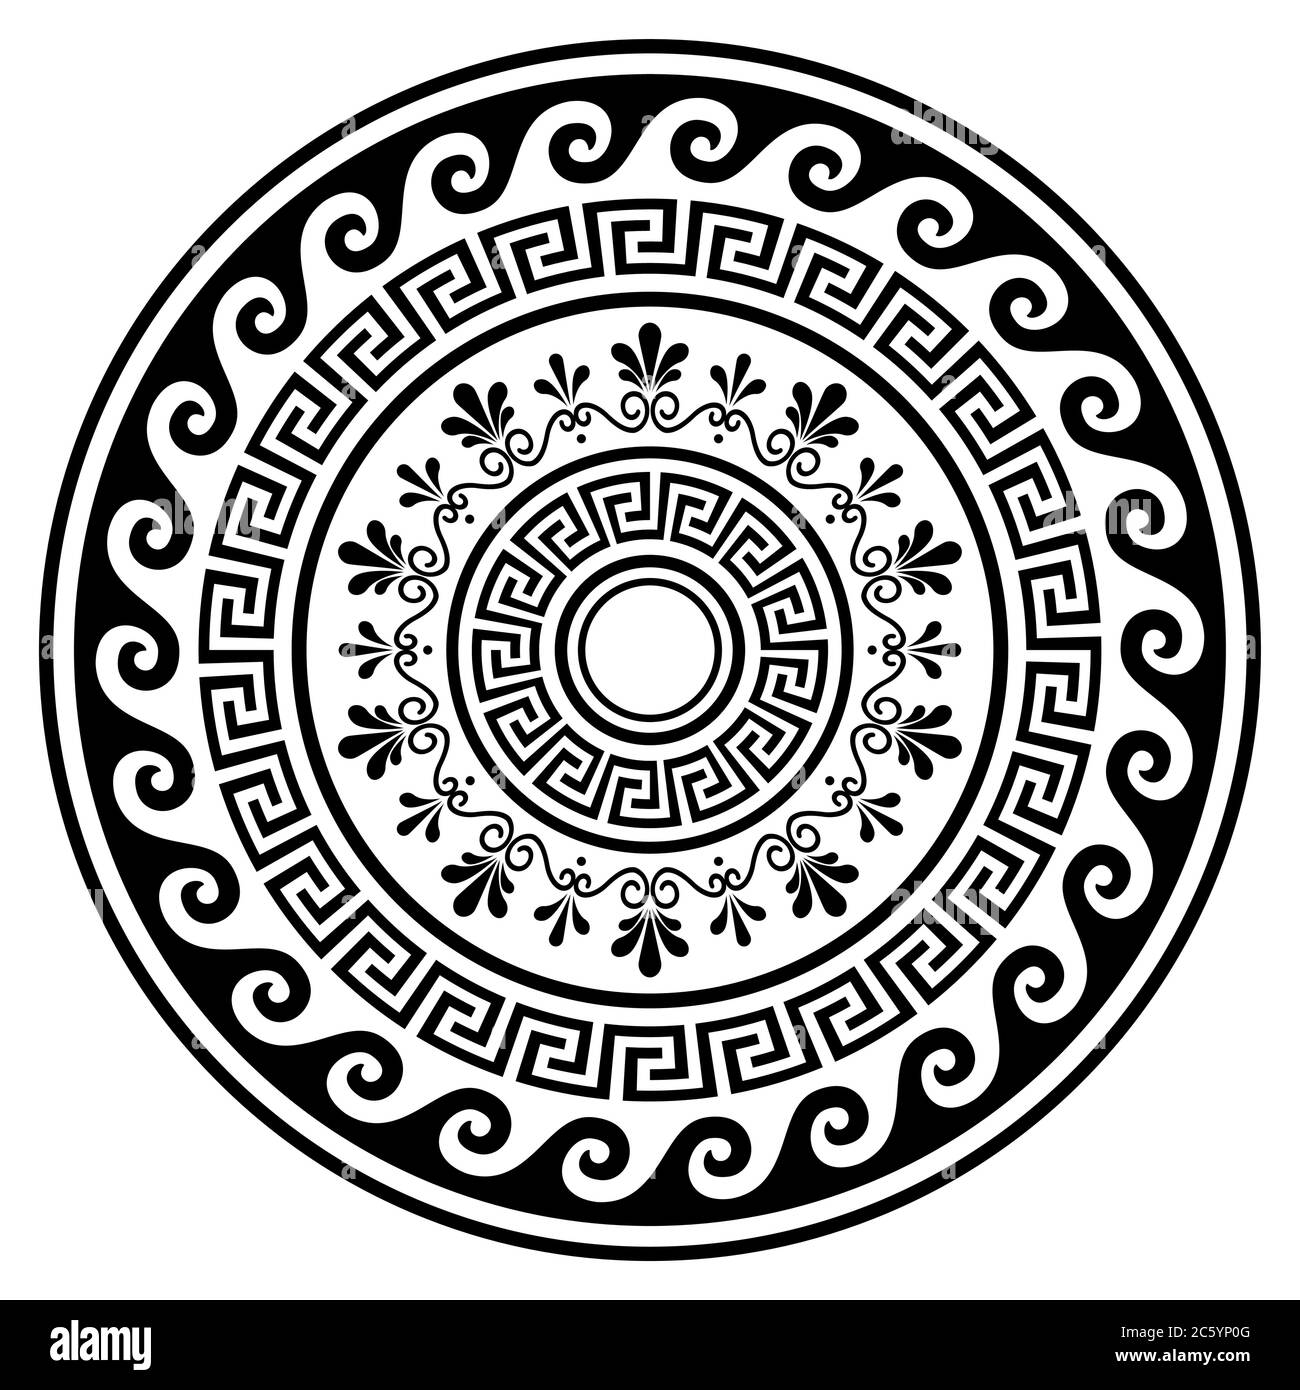 https://c8.alamy.com/comp/2C5YP0G/greek-vector-boho-mandala-design-with-key-pattern-flowers-and-waves-black-yoga-pattern-in-black-on-white-background-2C5YP0G.jpg